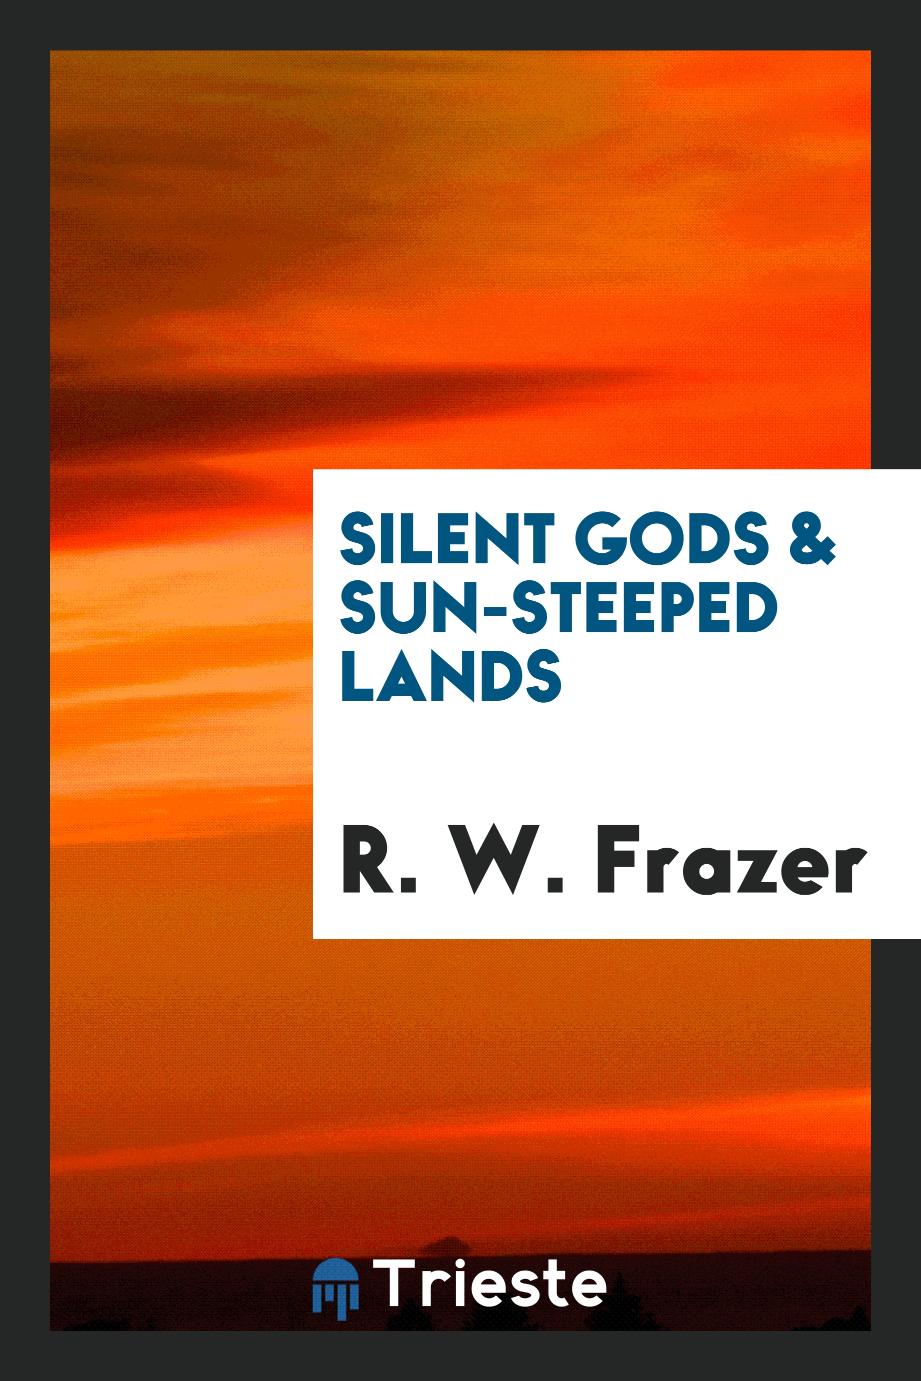 Silent gods & sun-steeped lands